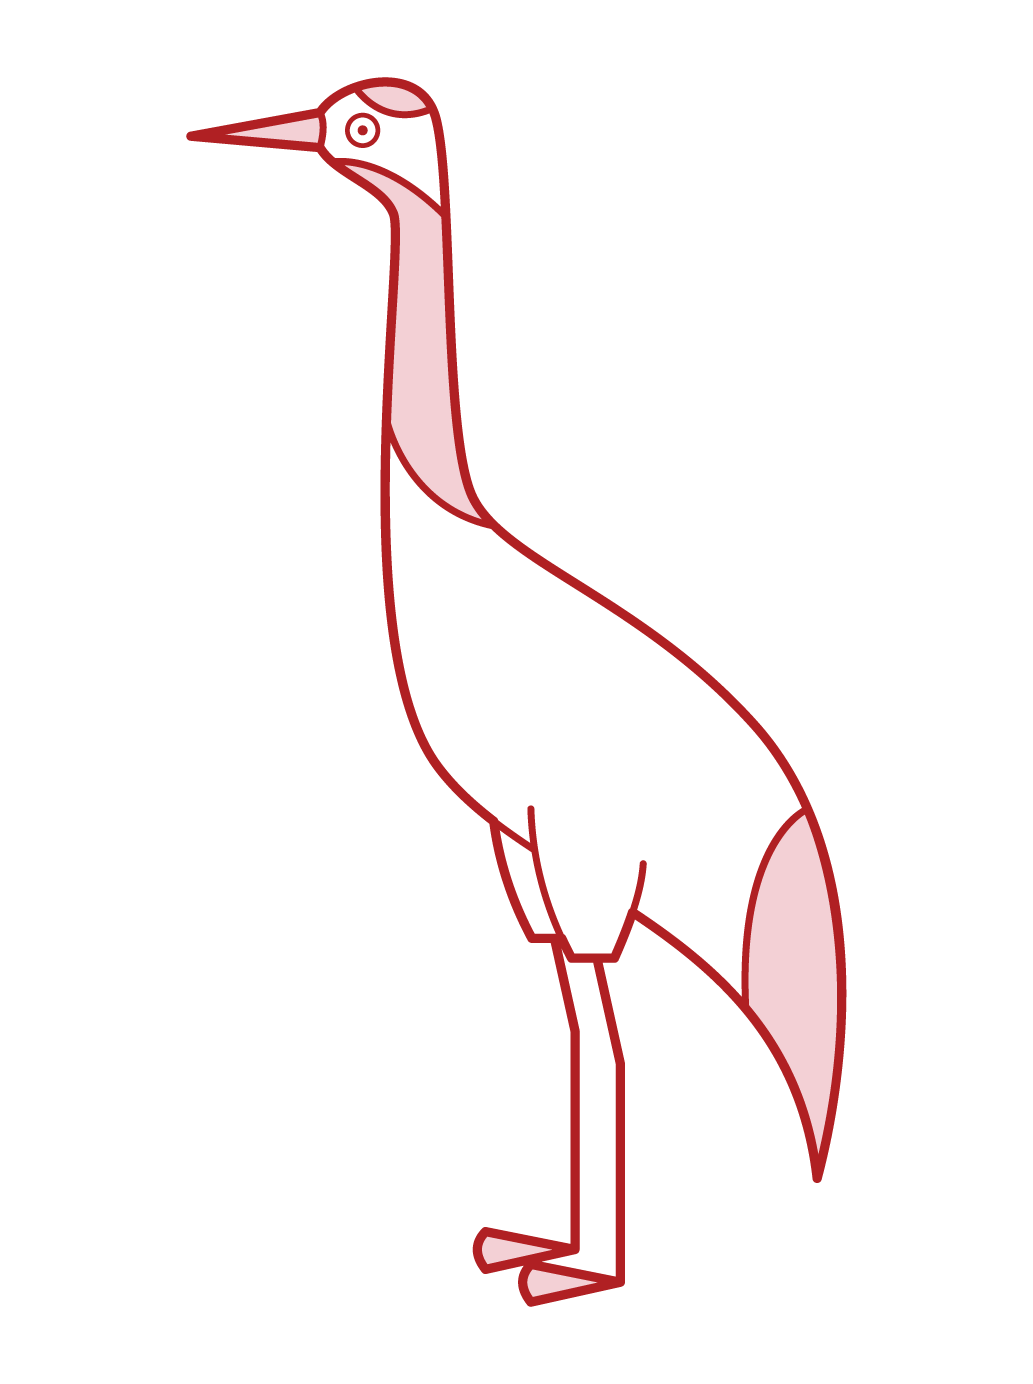 Illustration of a crane